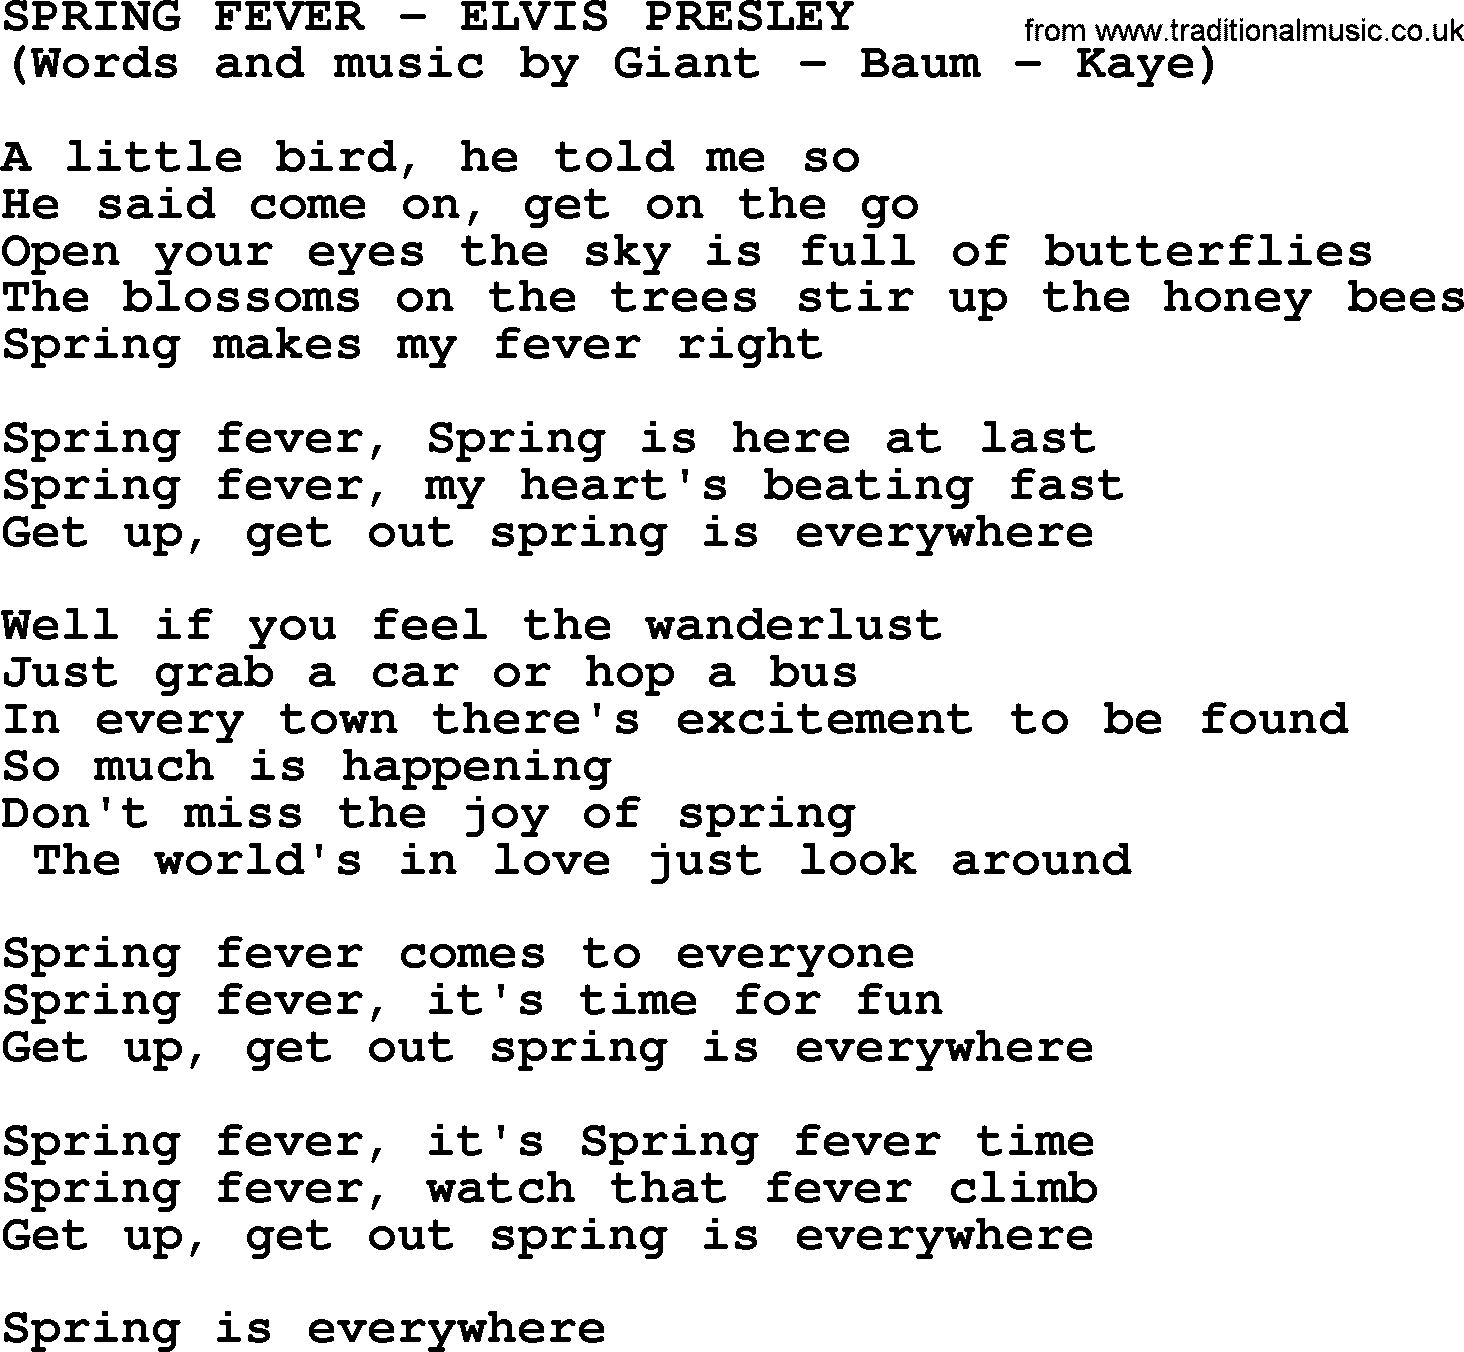 Elvis Presley song: Spring Fever lyrics